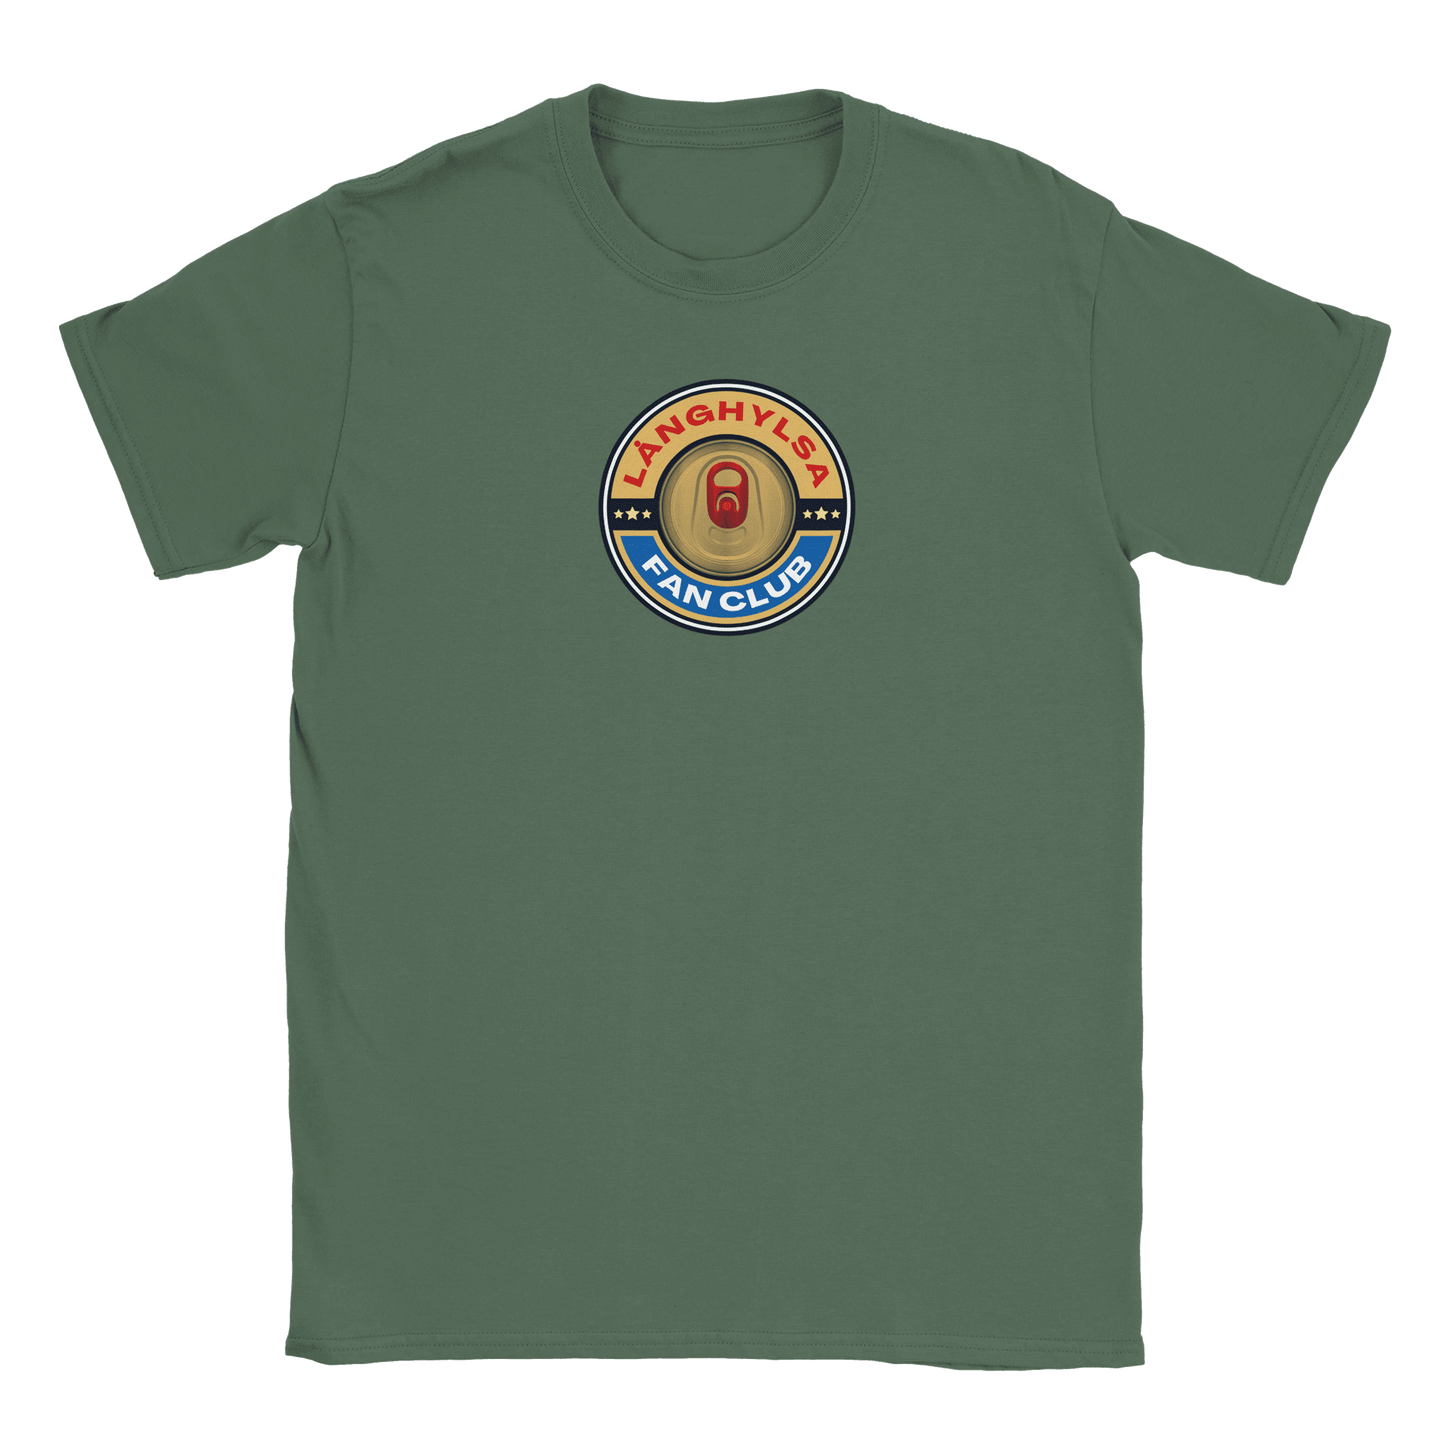 Långhylsa Fan Club Norrland Edition - T-shirt Military Green